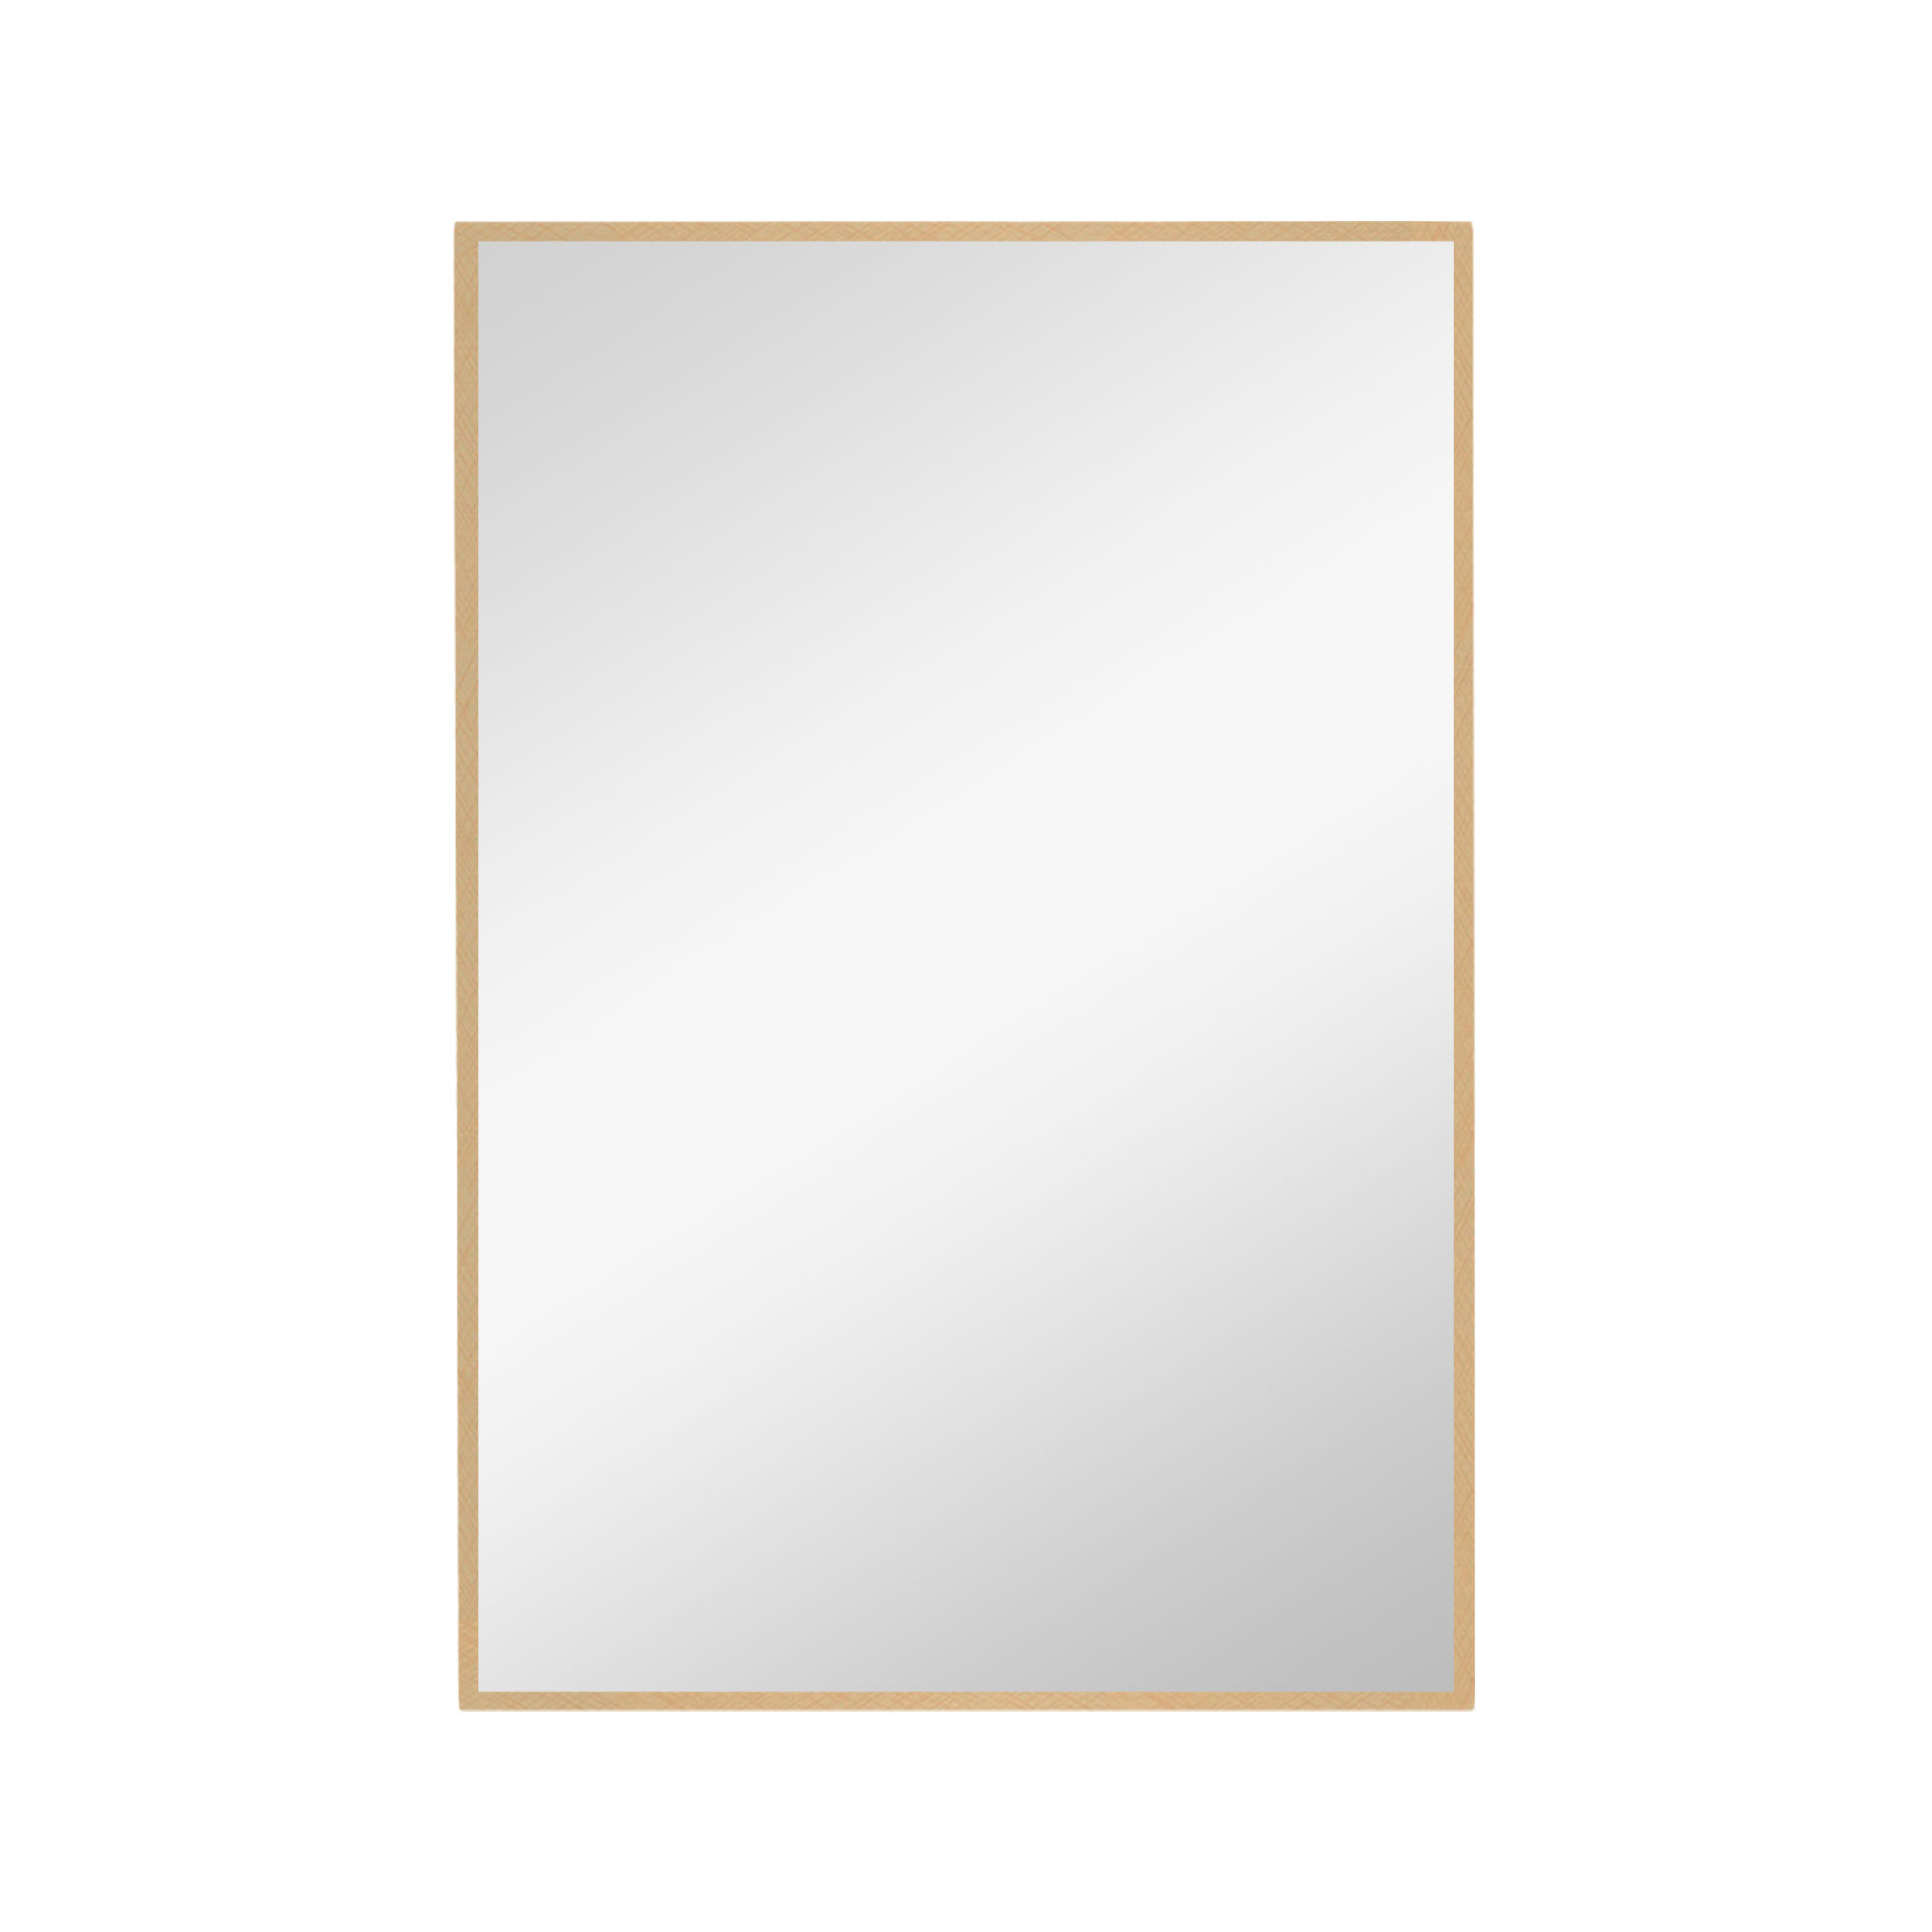 Narrow Gold Rectangular Wall Mirror